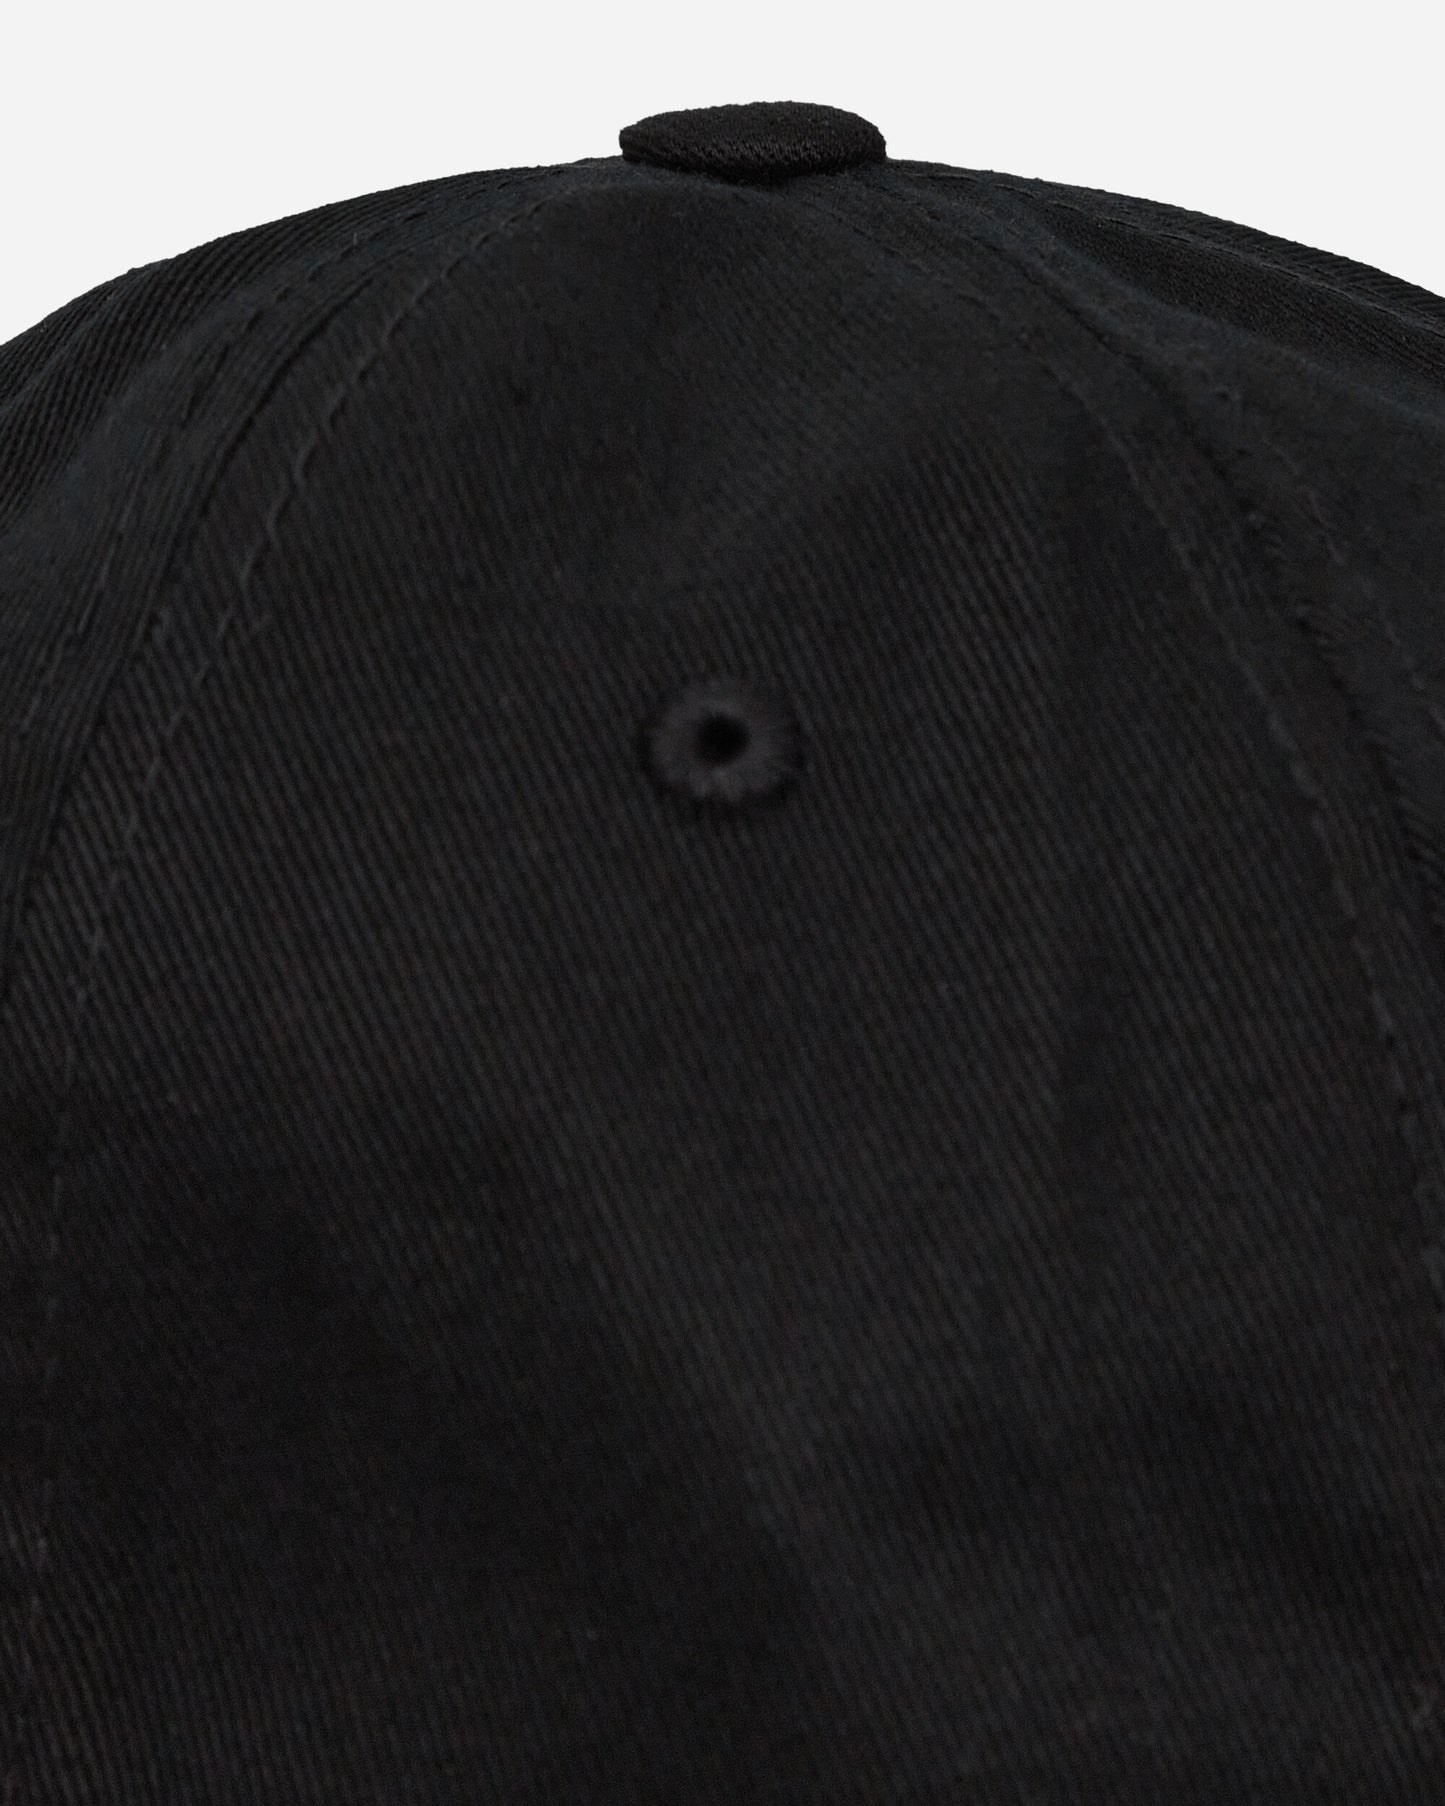 Stüssy 3 Star Low Pro Strapback Cap Black Hats Caps 1311140 0001